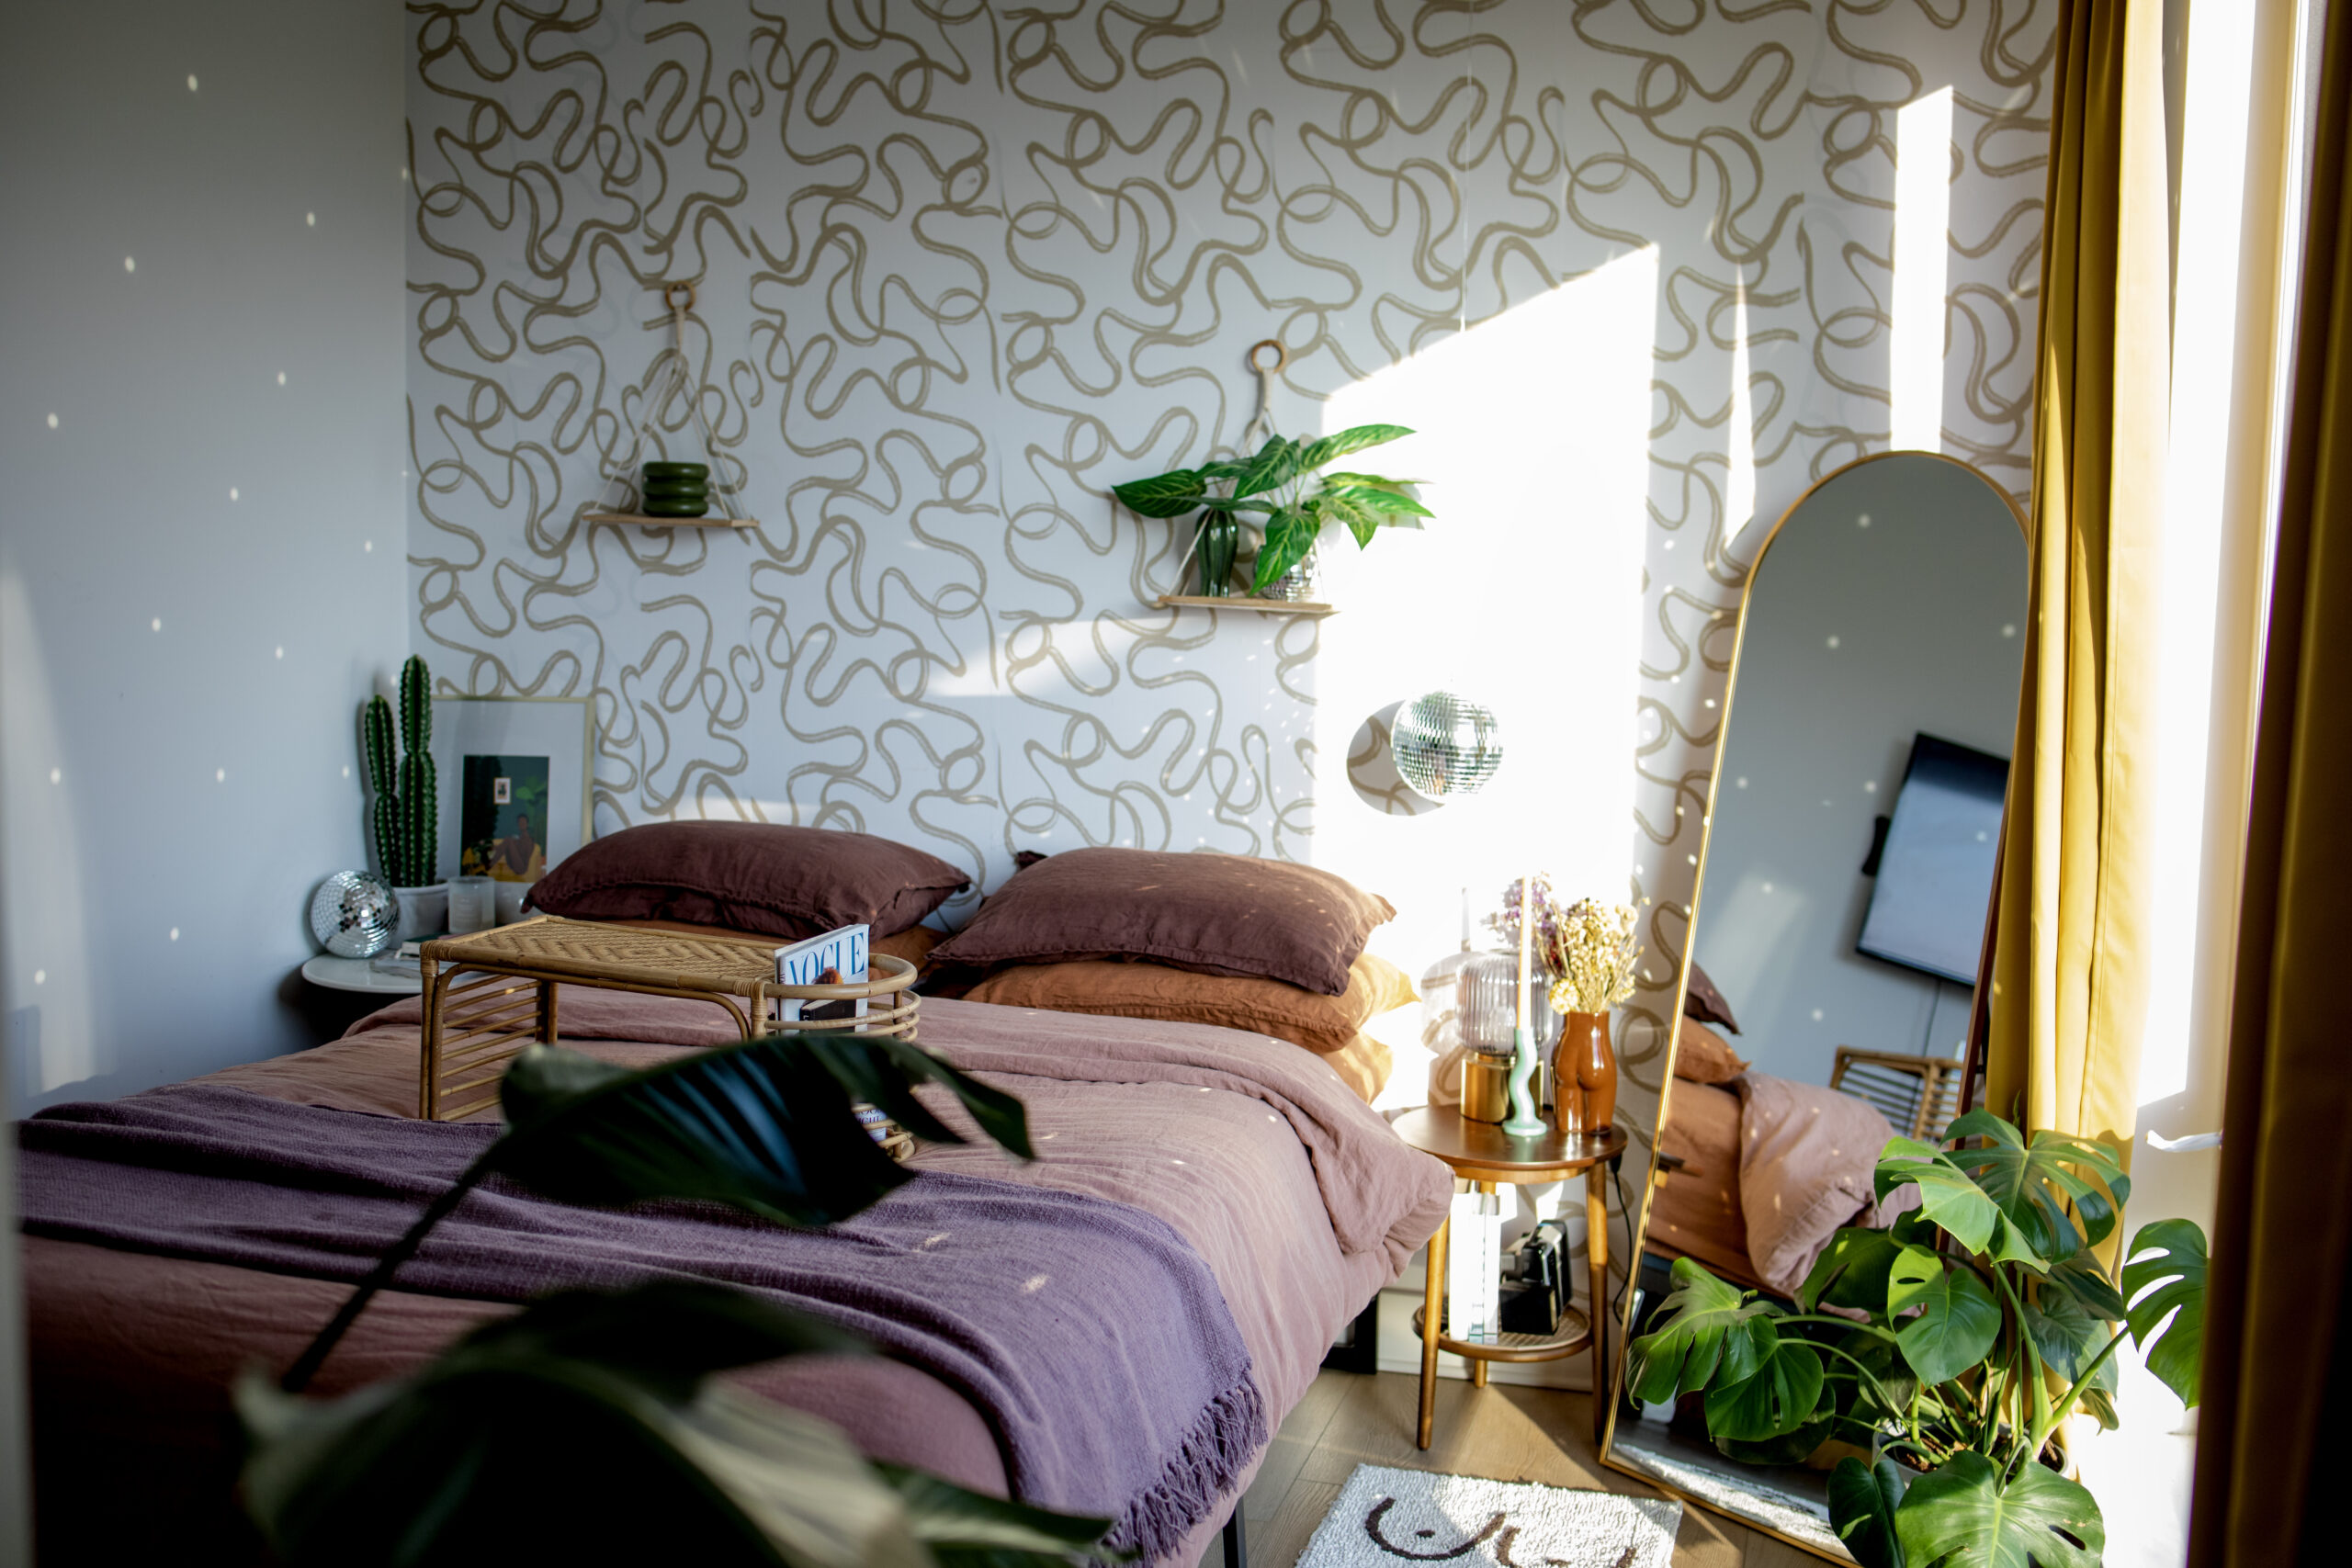 photographer Taylor Baldwin's bedroom